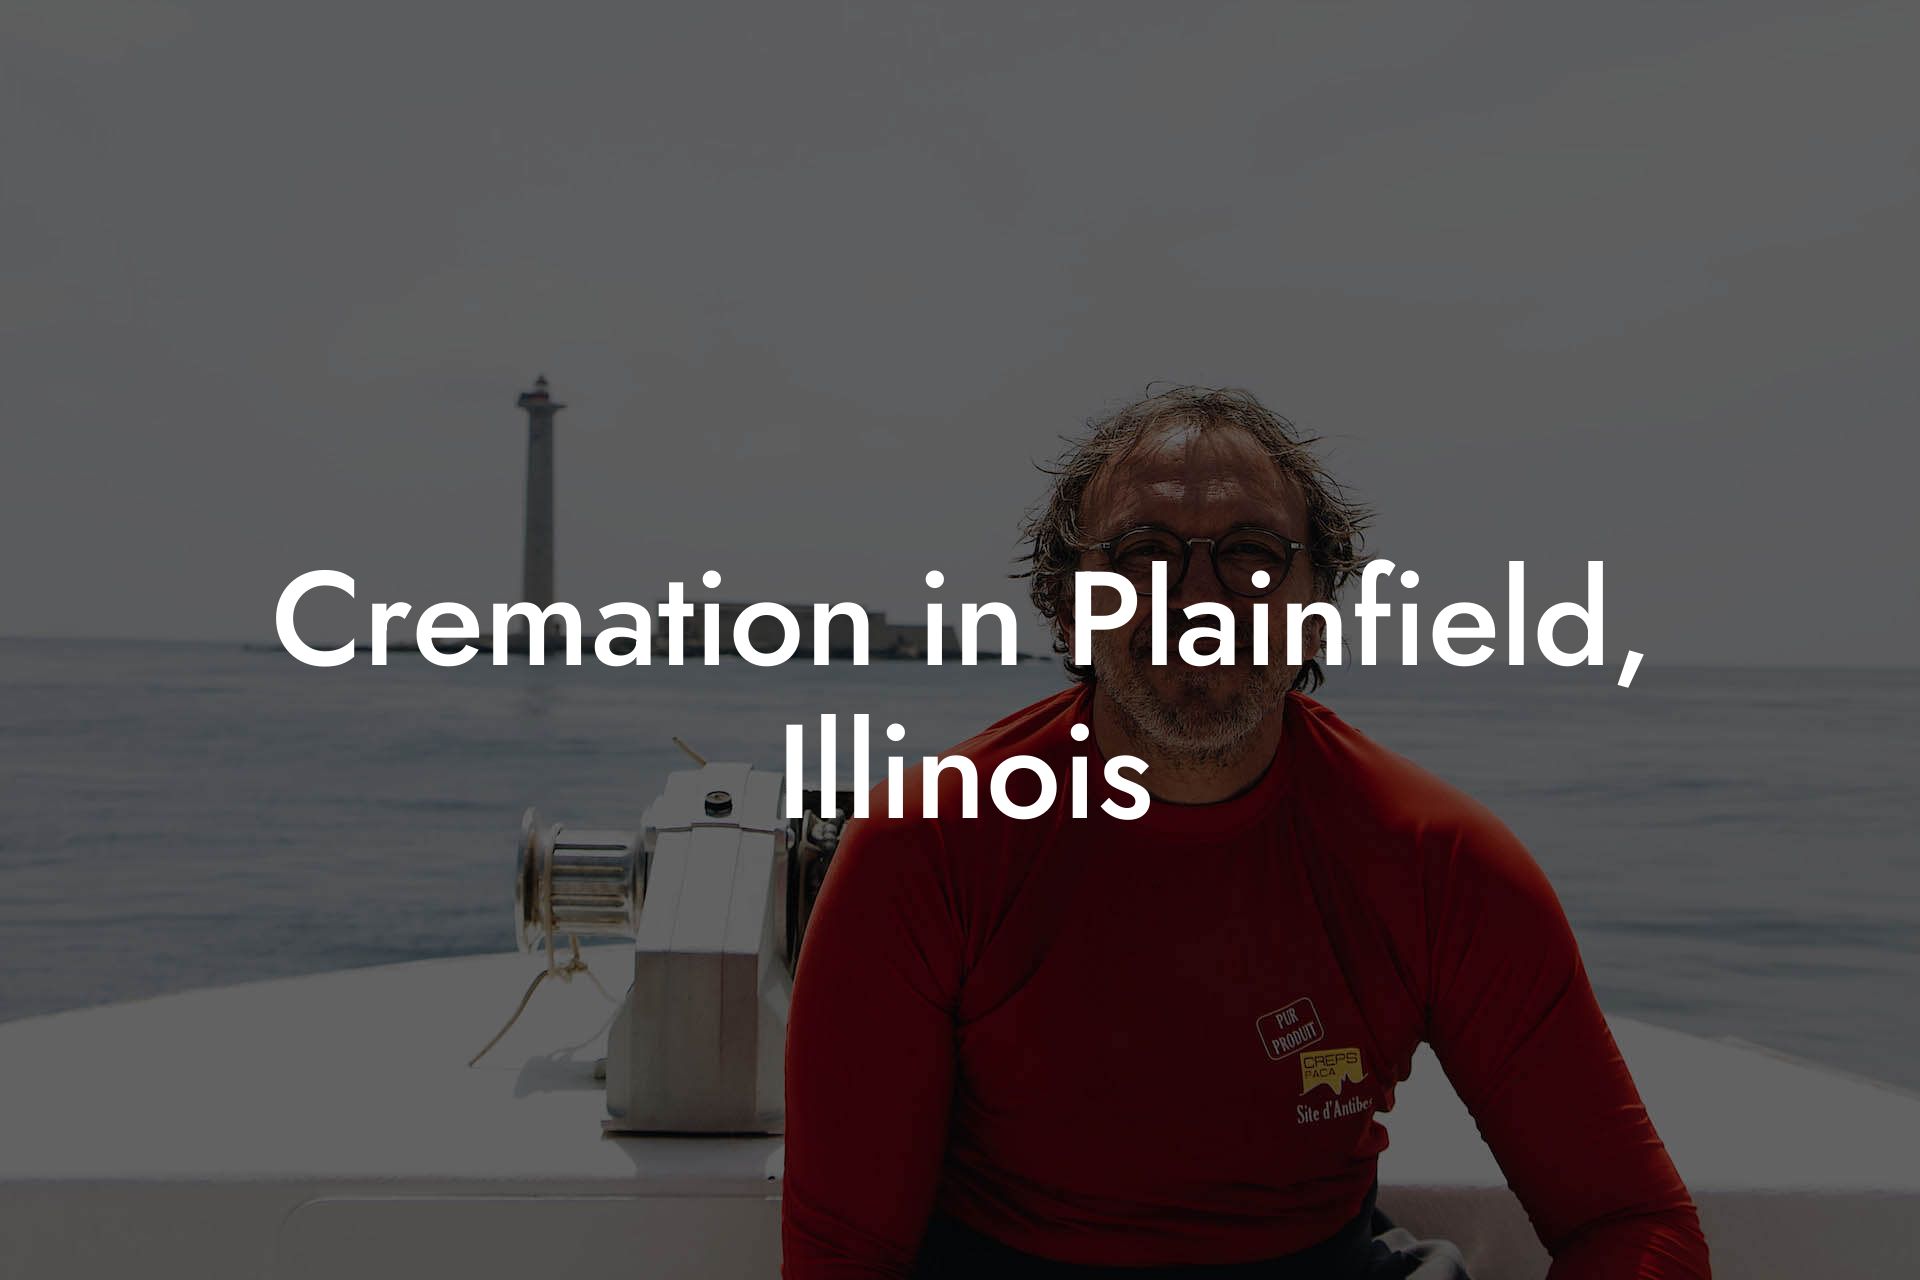 Cremation in Plainfield, Illinois